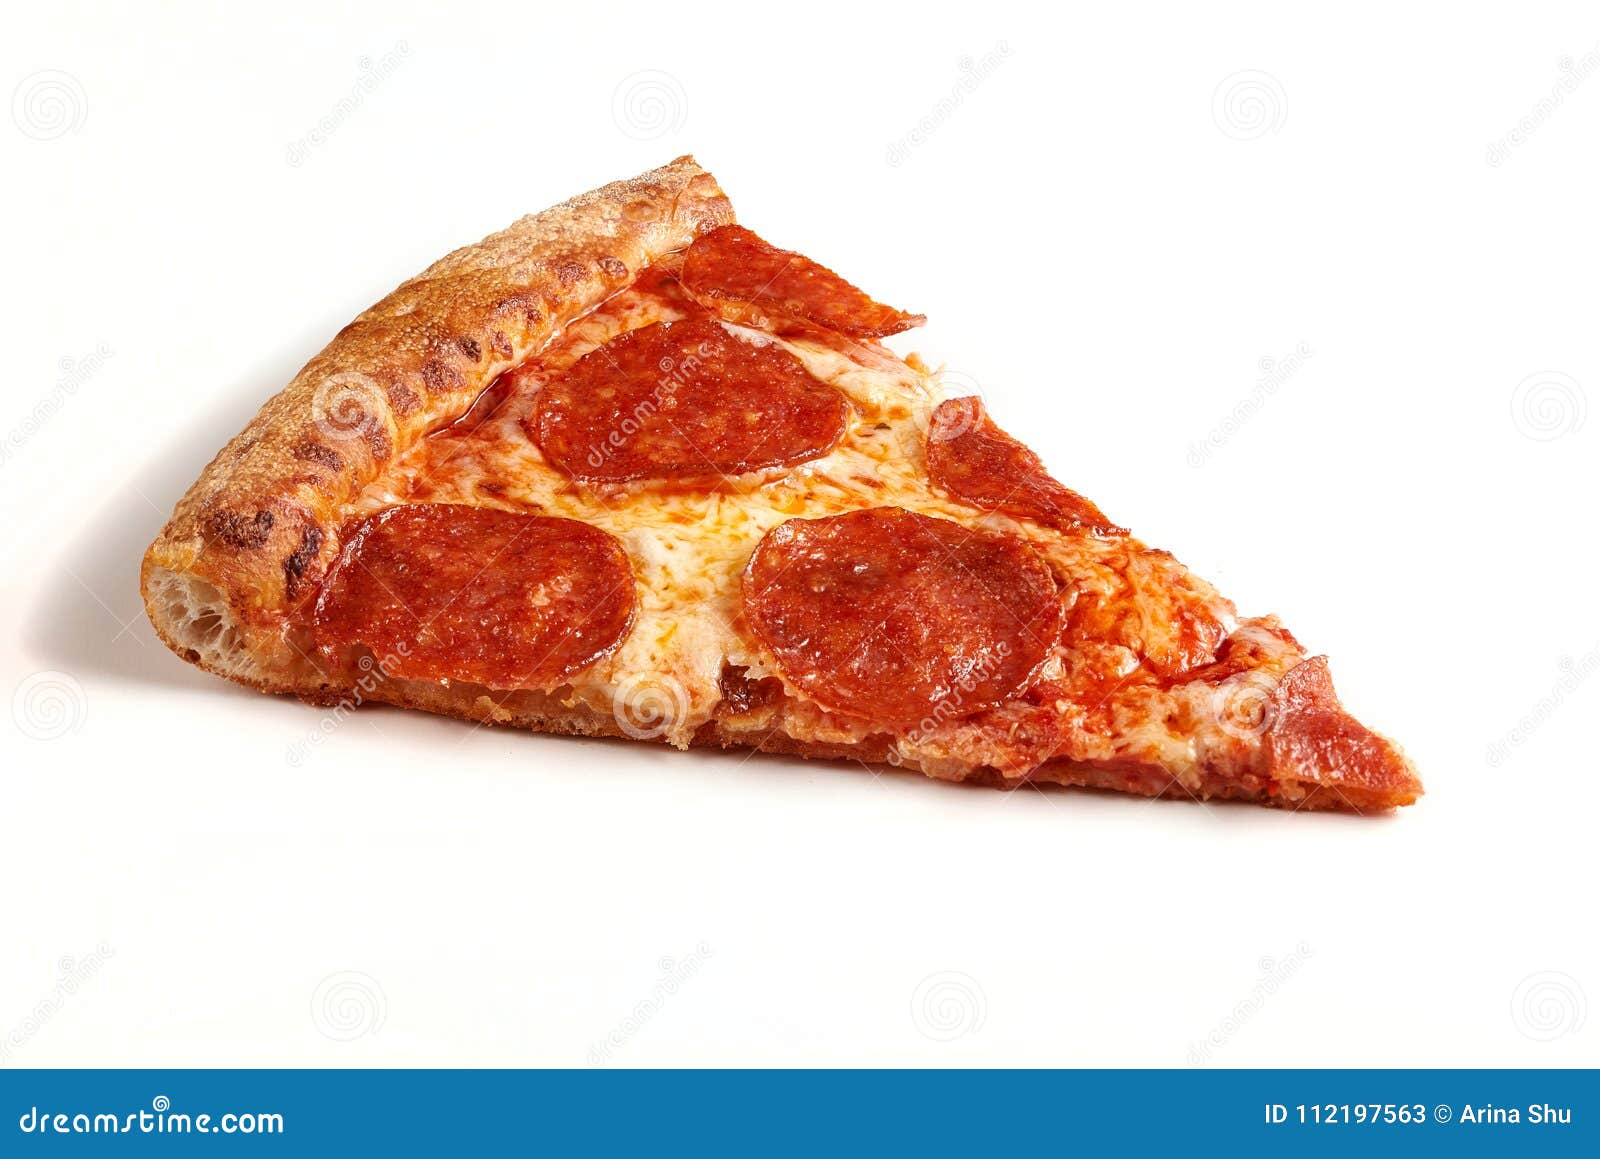 slice of classic original pepperoni pizza  on white background